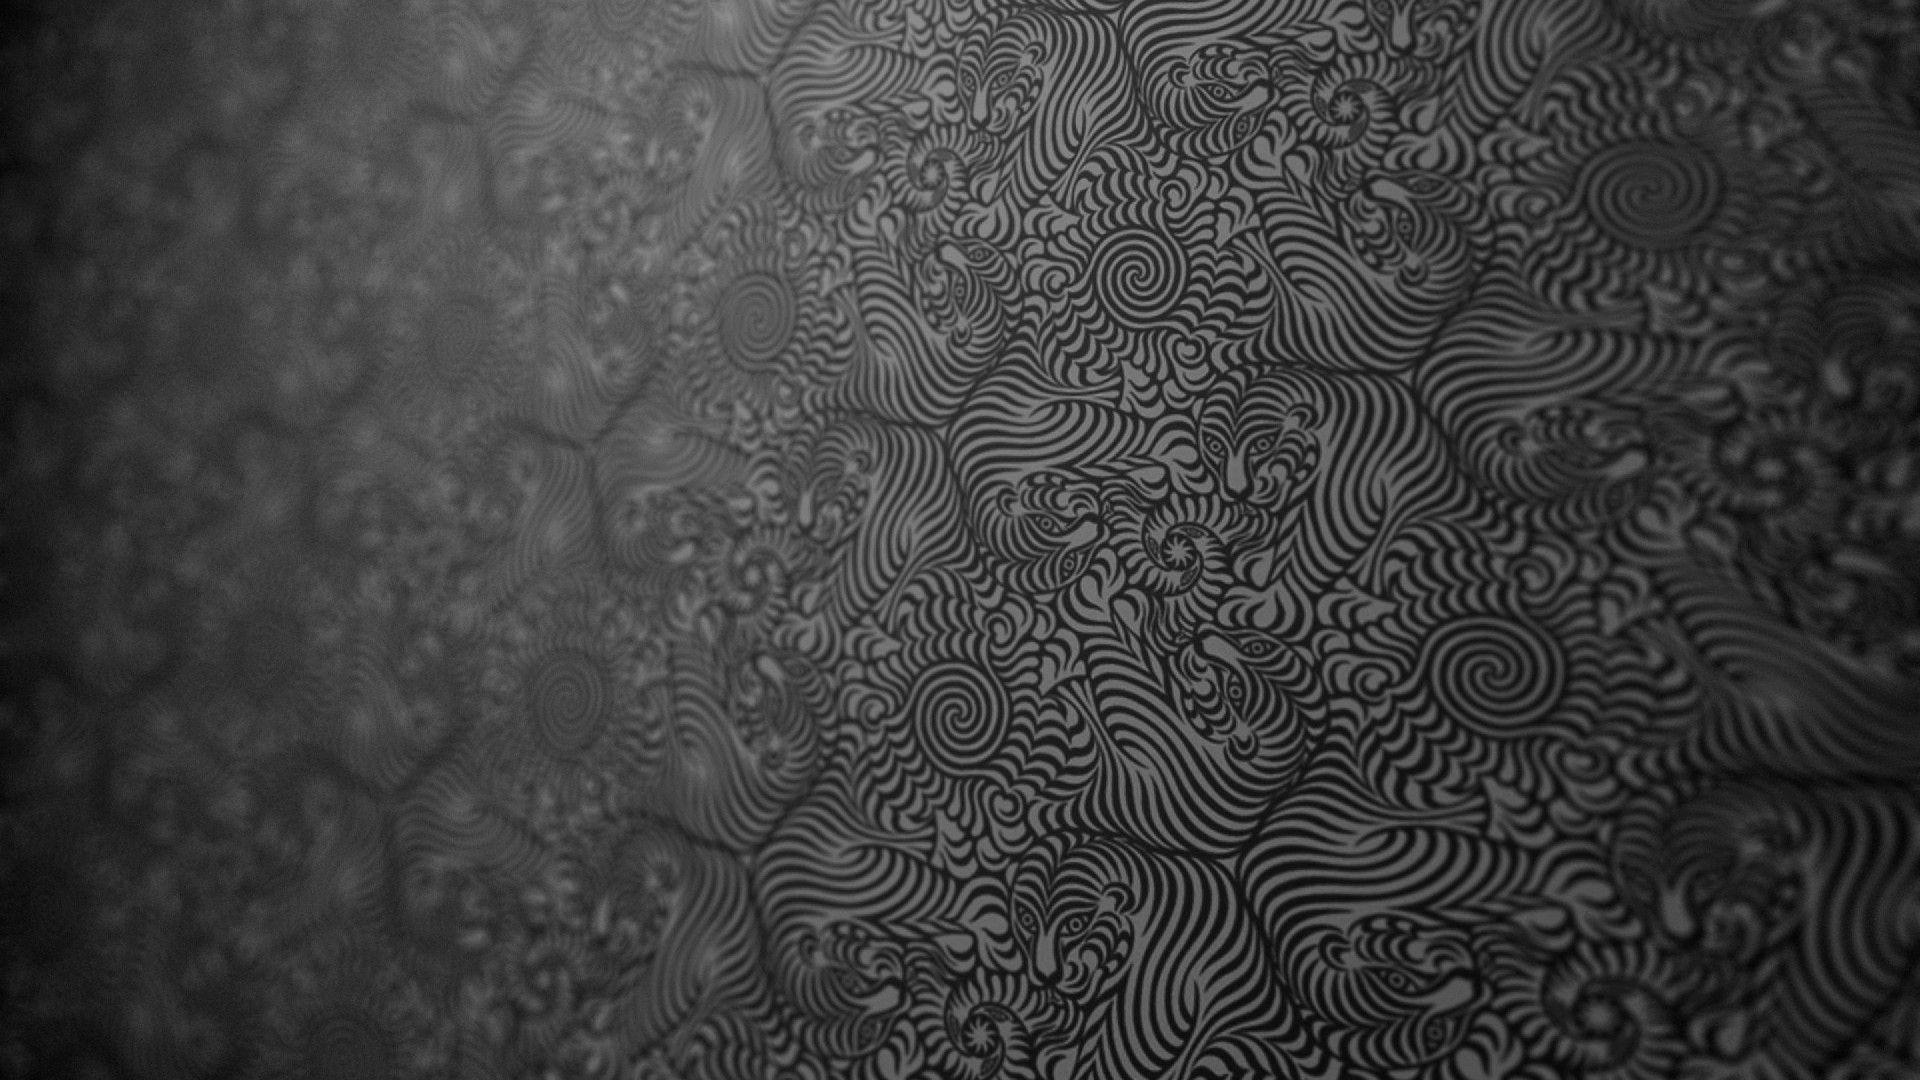 Texture Black White Patterns Tigers Mac Wallpaper Download. Free